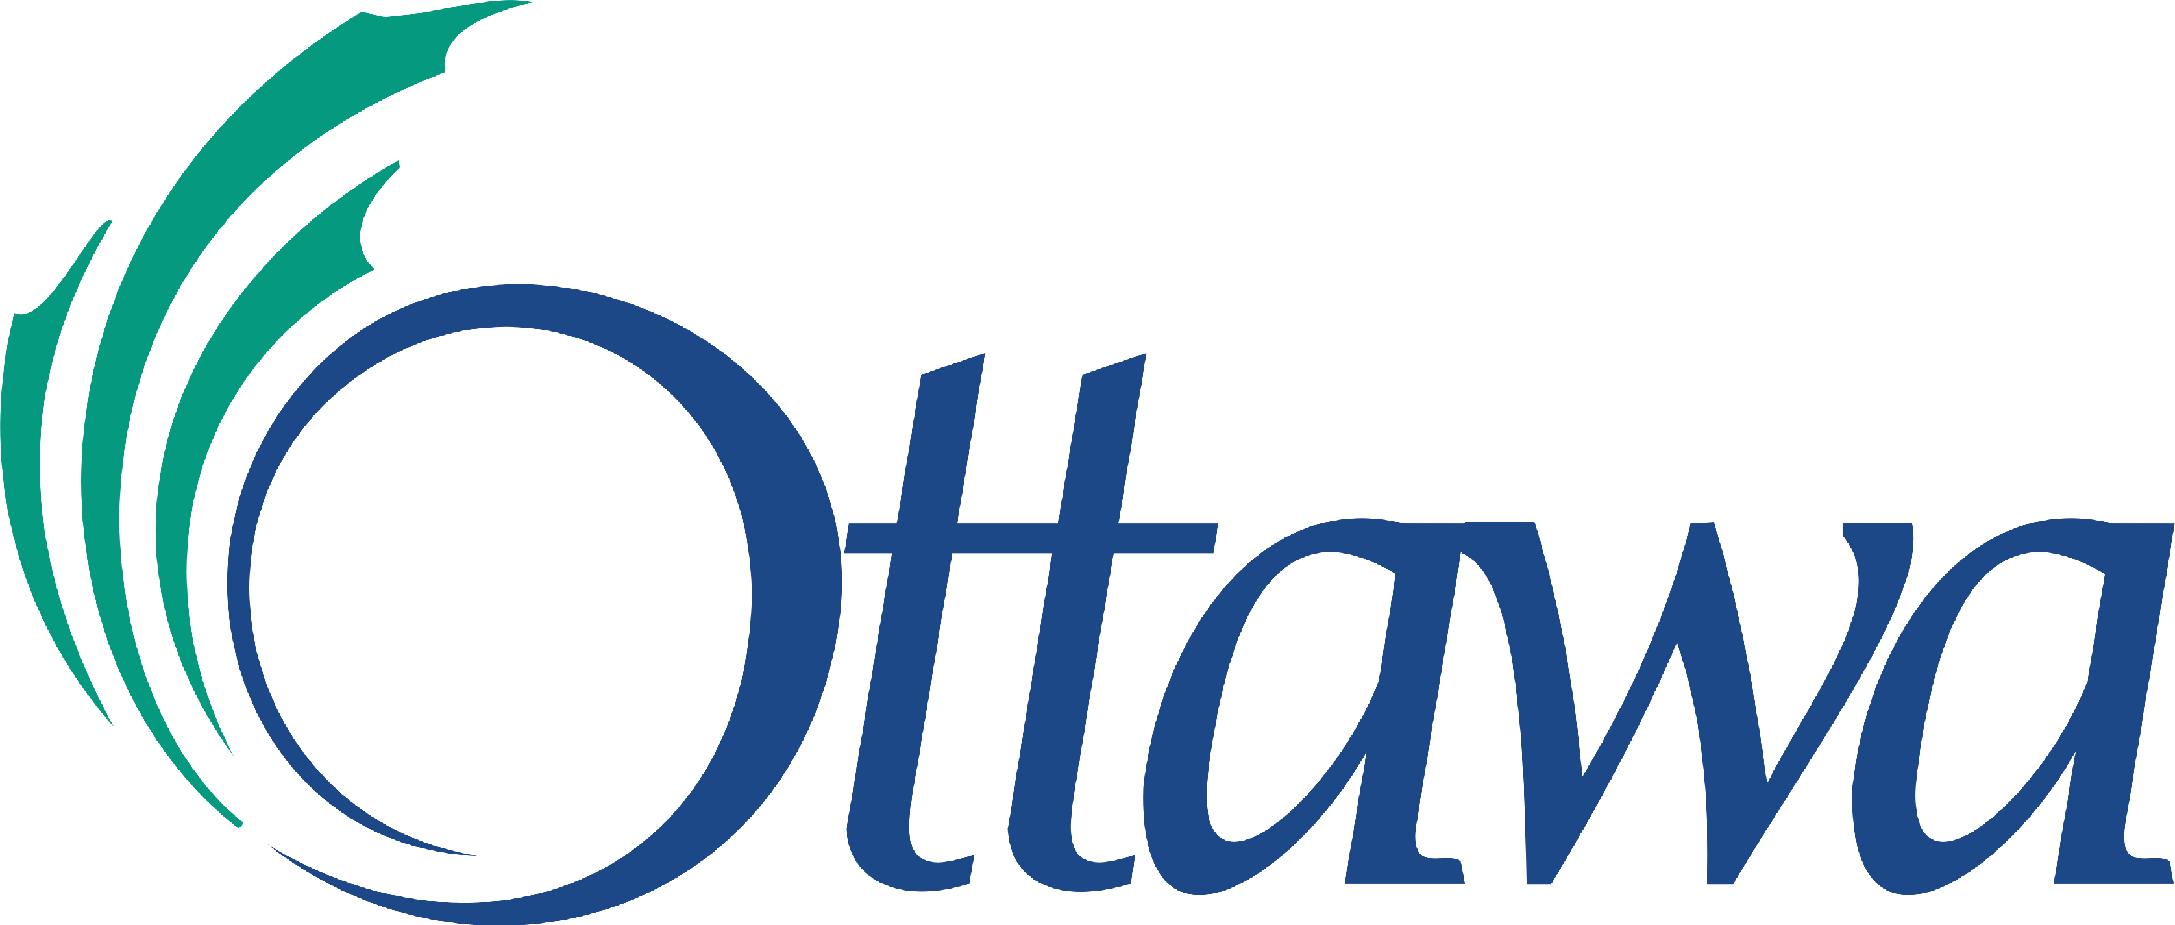 City of Ottawa, ON